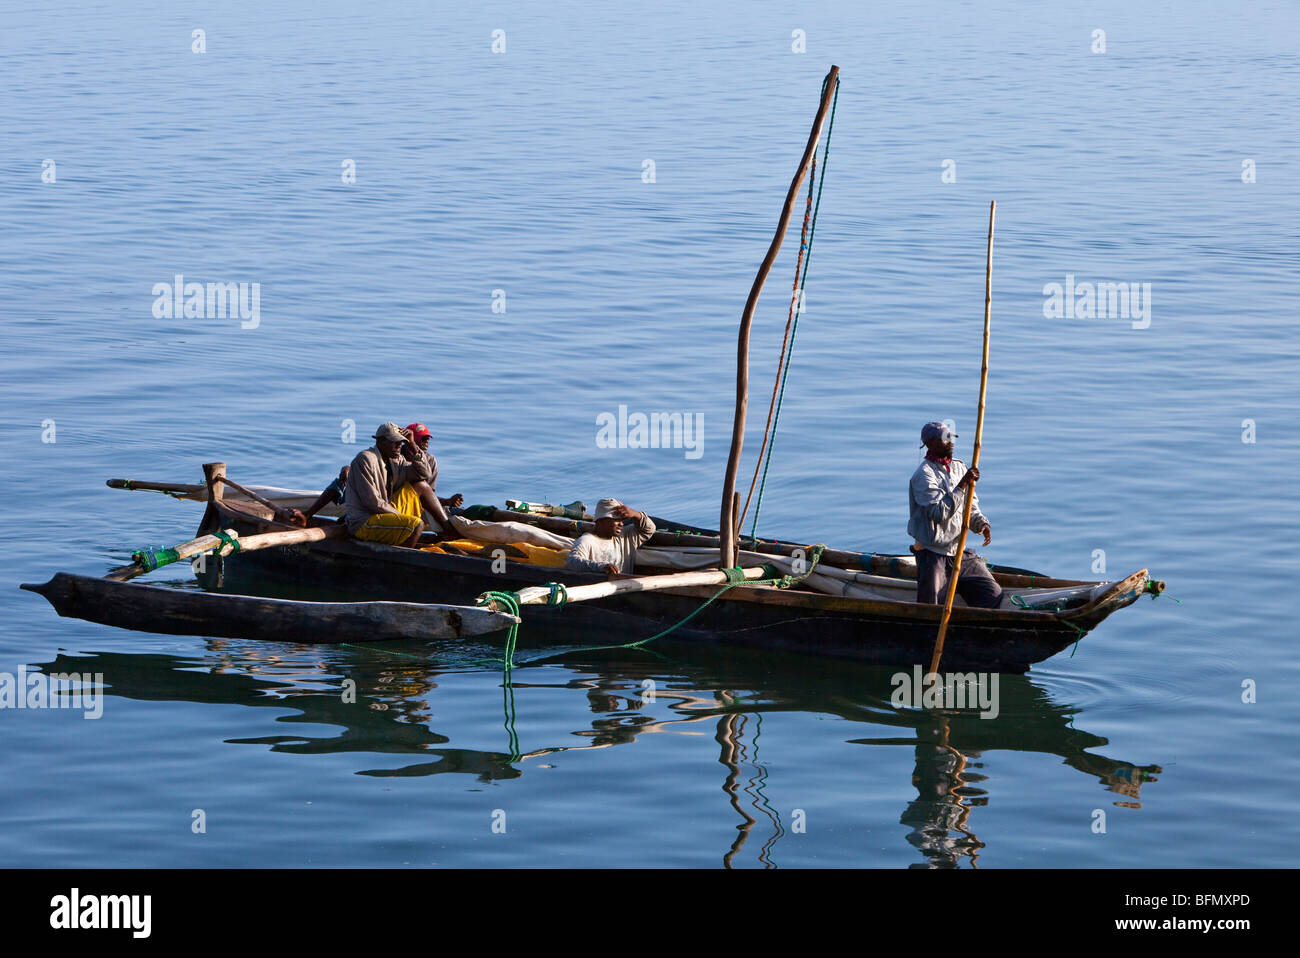 Tanzania, Zanzibar. In the morning, fishermen pole an outrigger canoe back to Zanzibars dhow harbour after fishing all night. Stock Photo